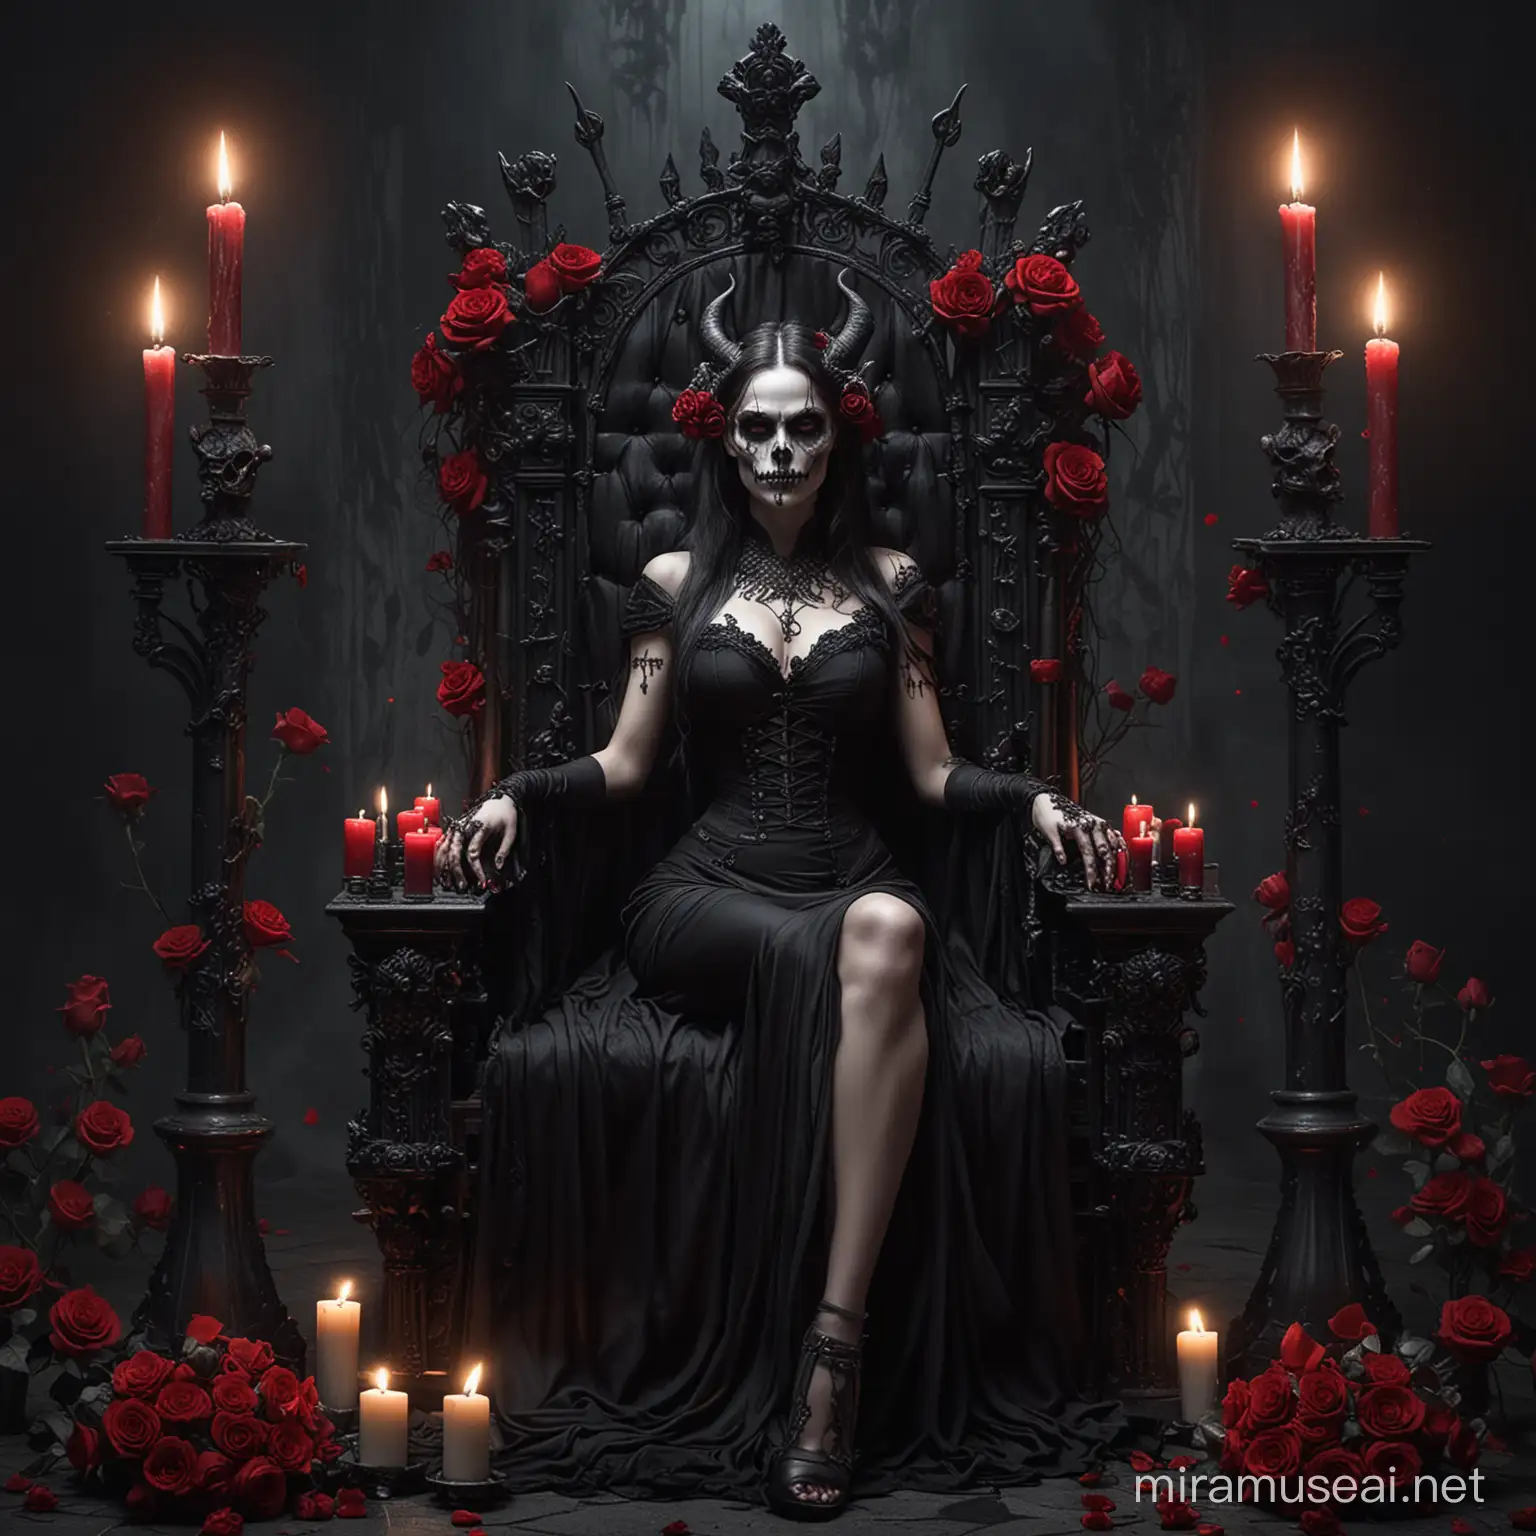 Skulls, demon lady, dark, gothic, roses, candles, throne, 